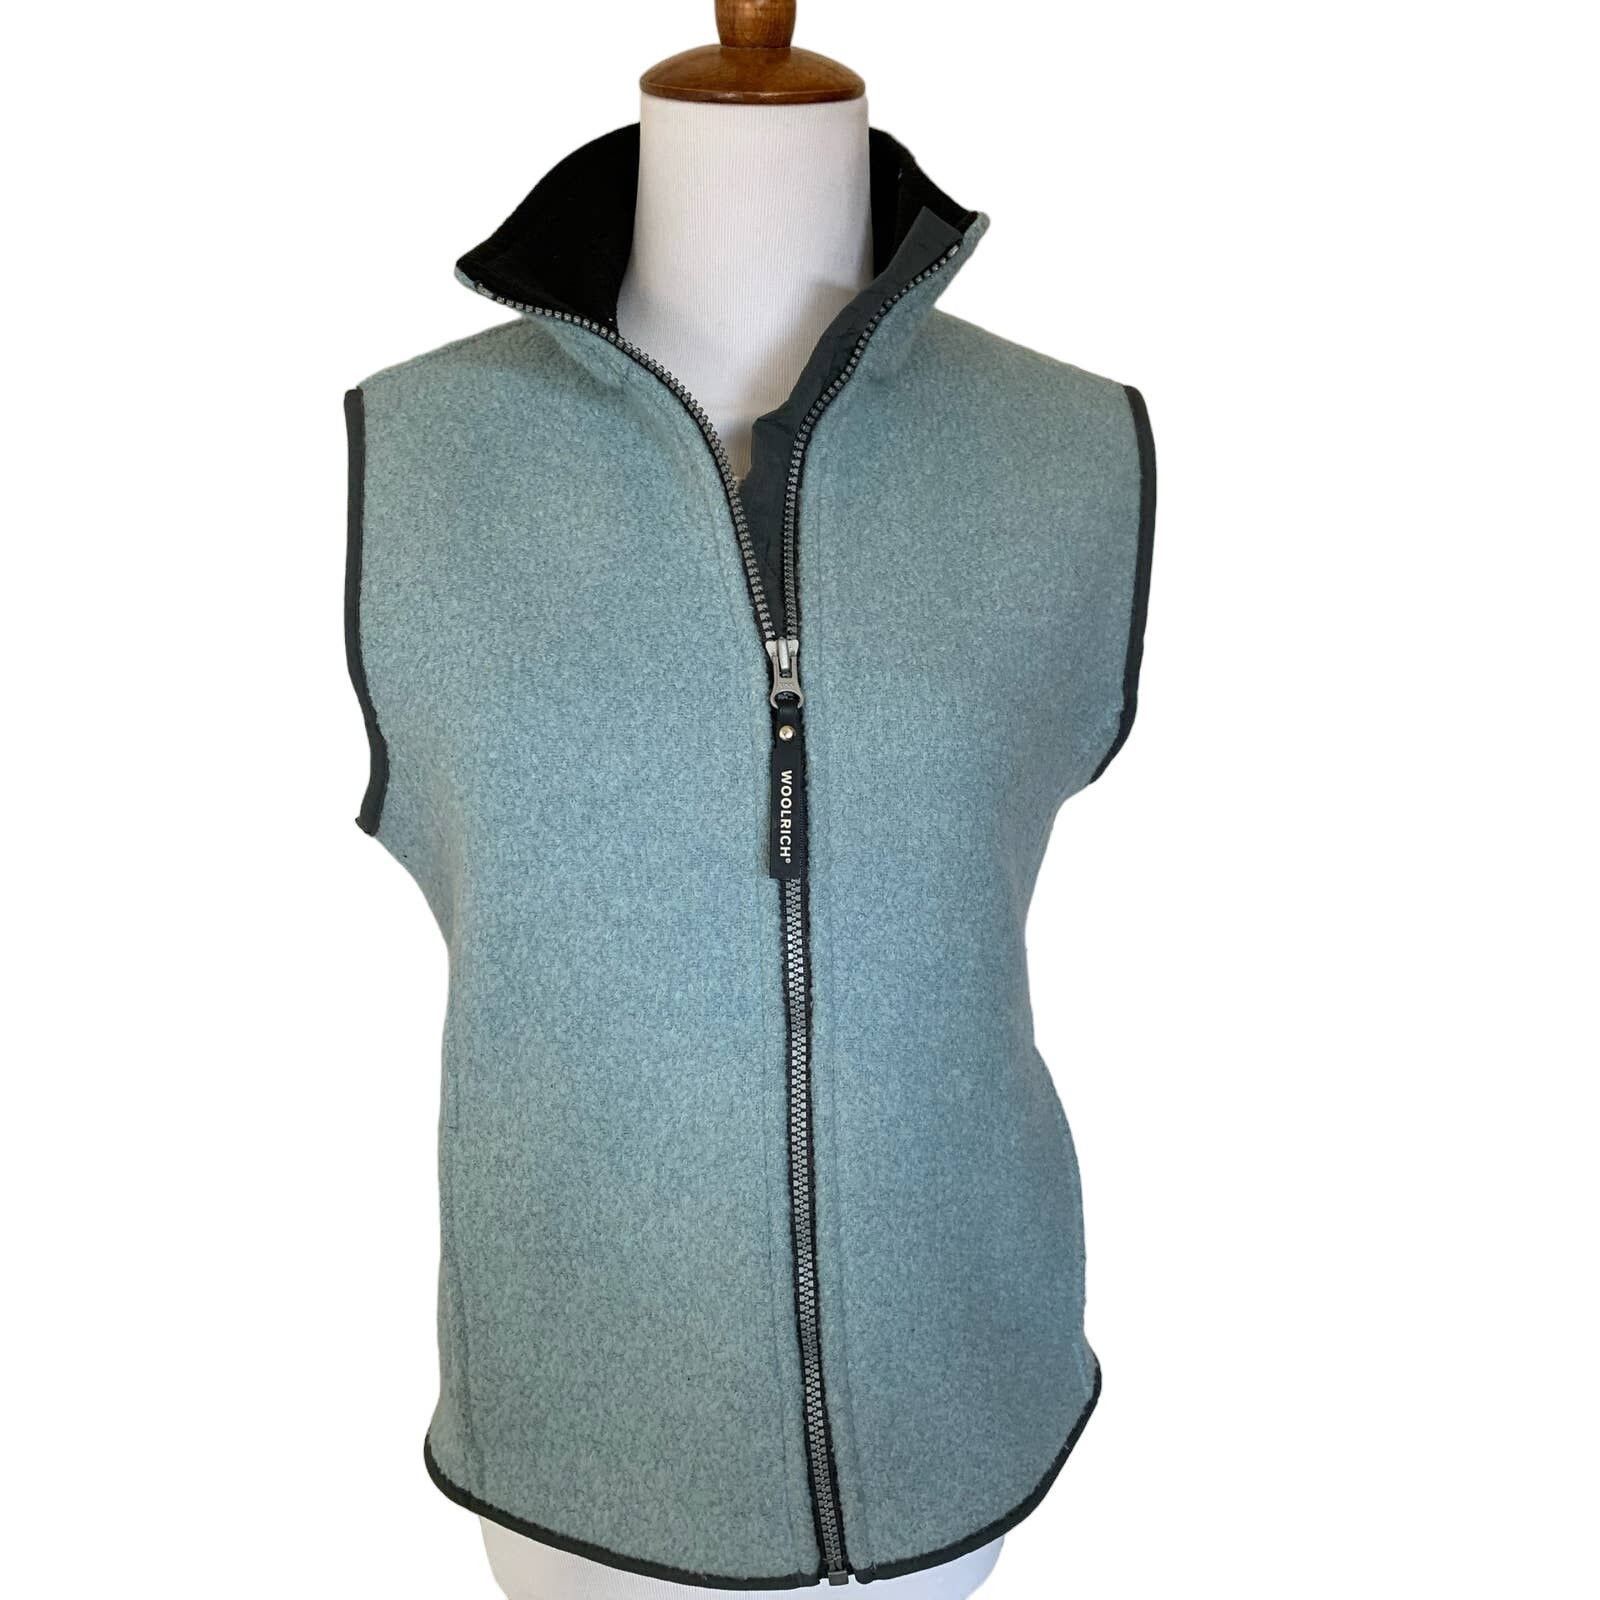 Woolrich Woolen Mills Woolrich wool vest blue womens size small euc Size S / US 4 / IT 40 - 1 Preview